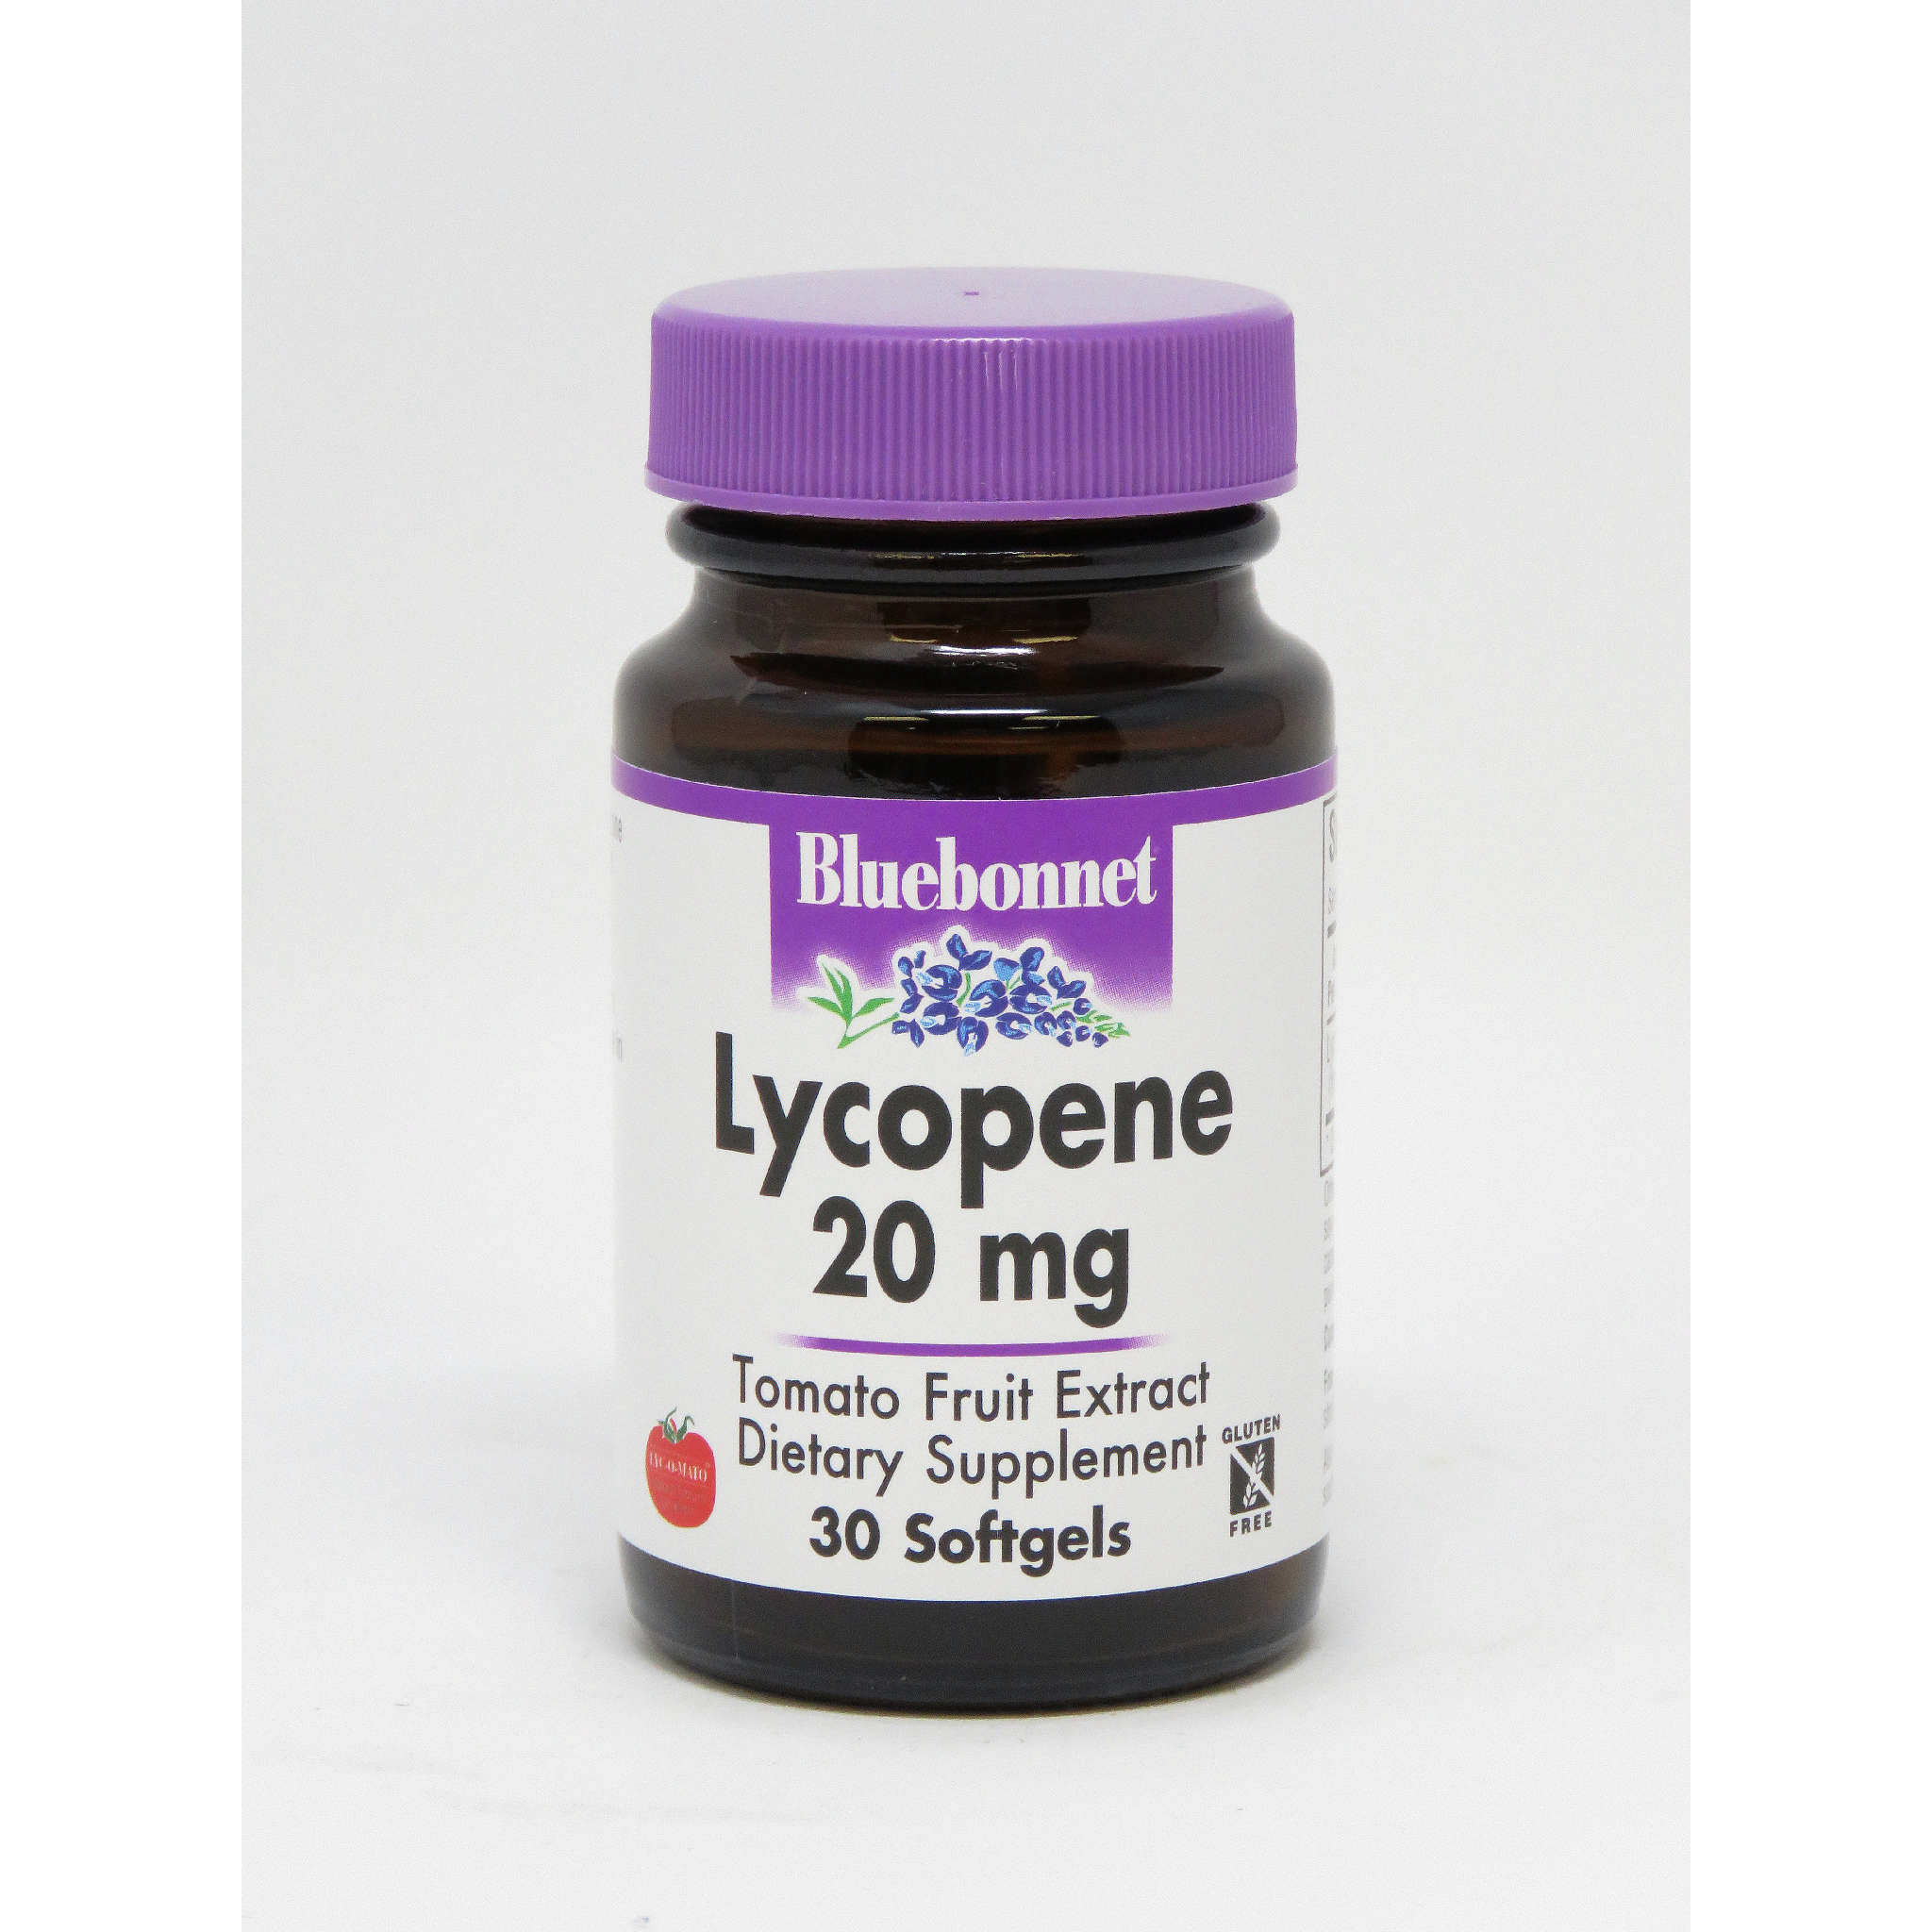 Bluebonnet - Lycopene 20 mg softgel